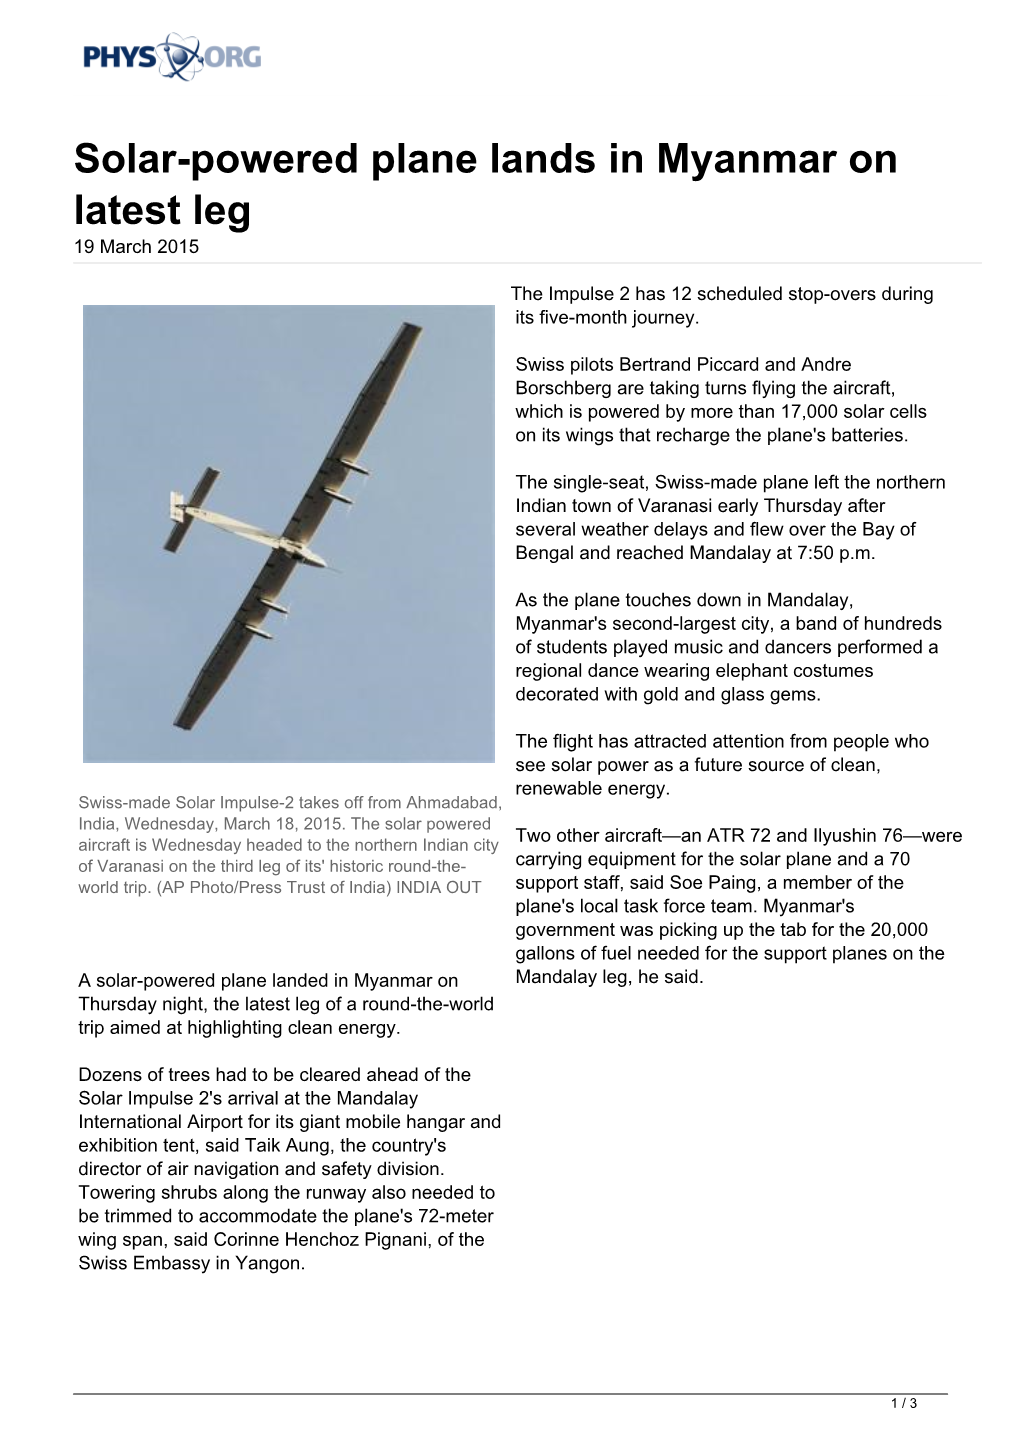 Solar-Powered Plane Lands in Myanmar on Latest Leg 19 March 2015